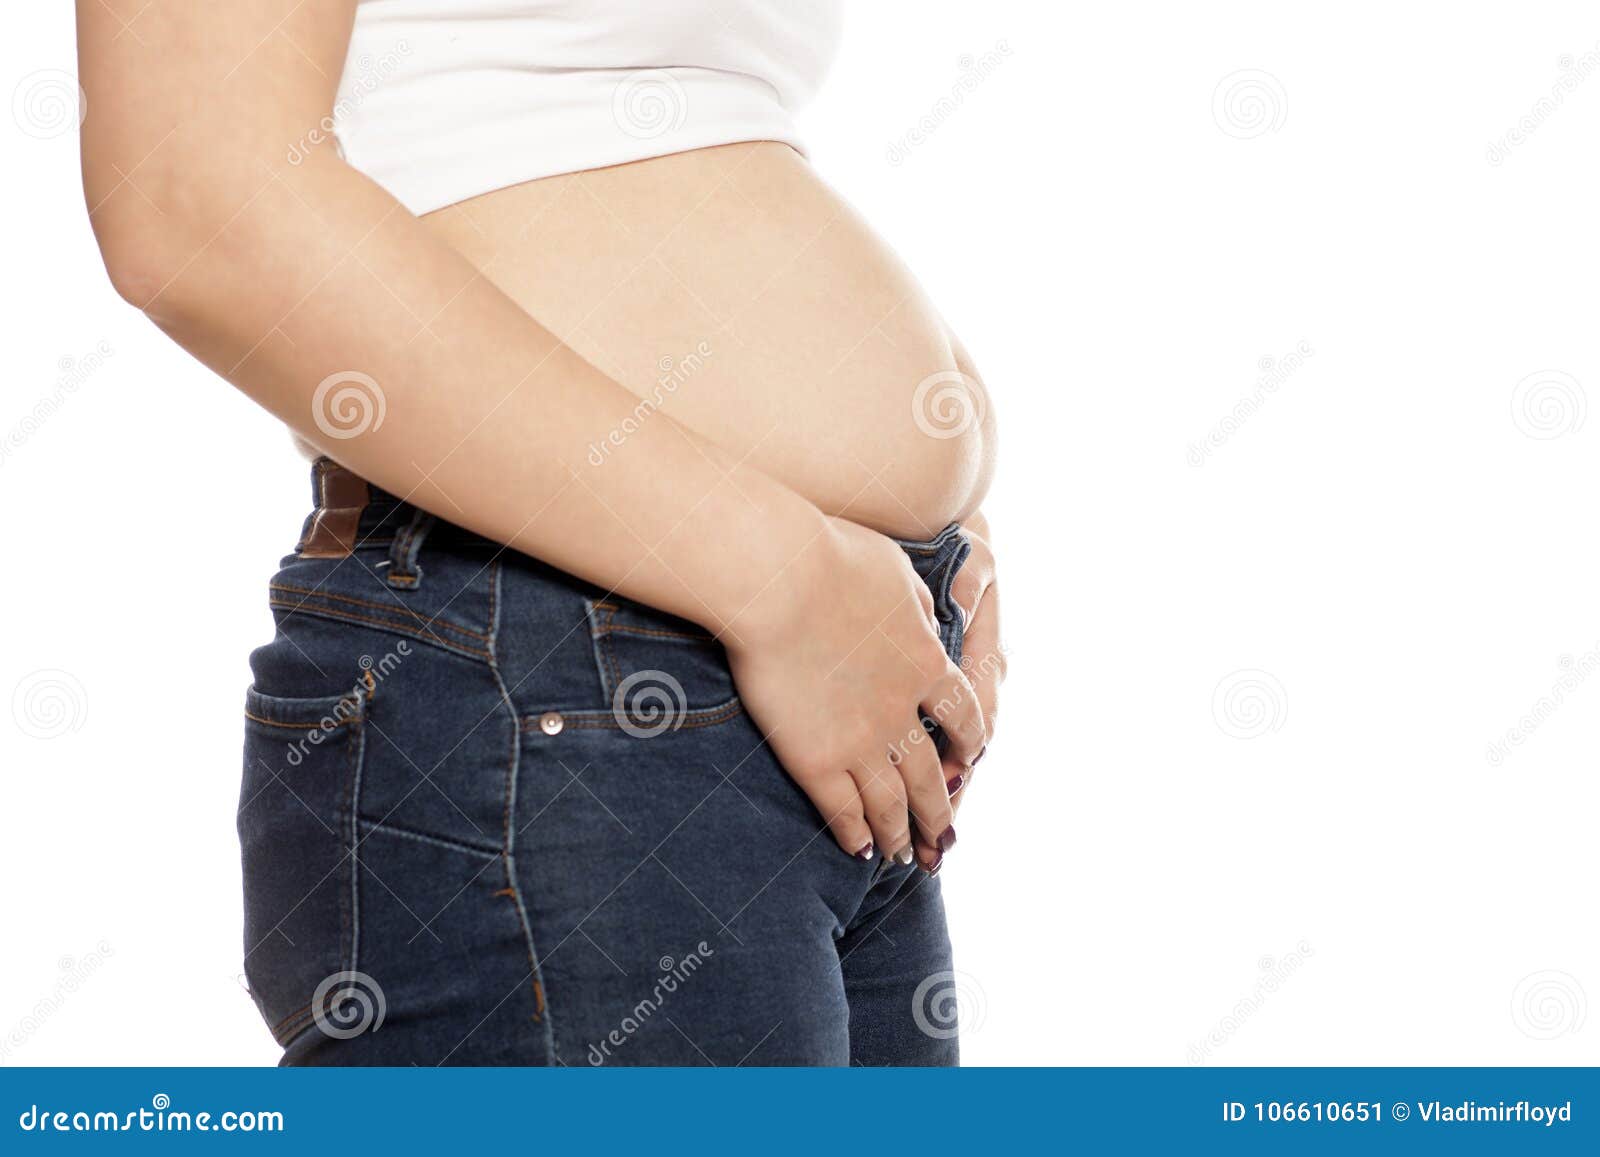 Bloat girl belly Model Shows